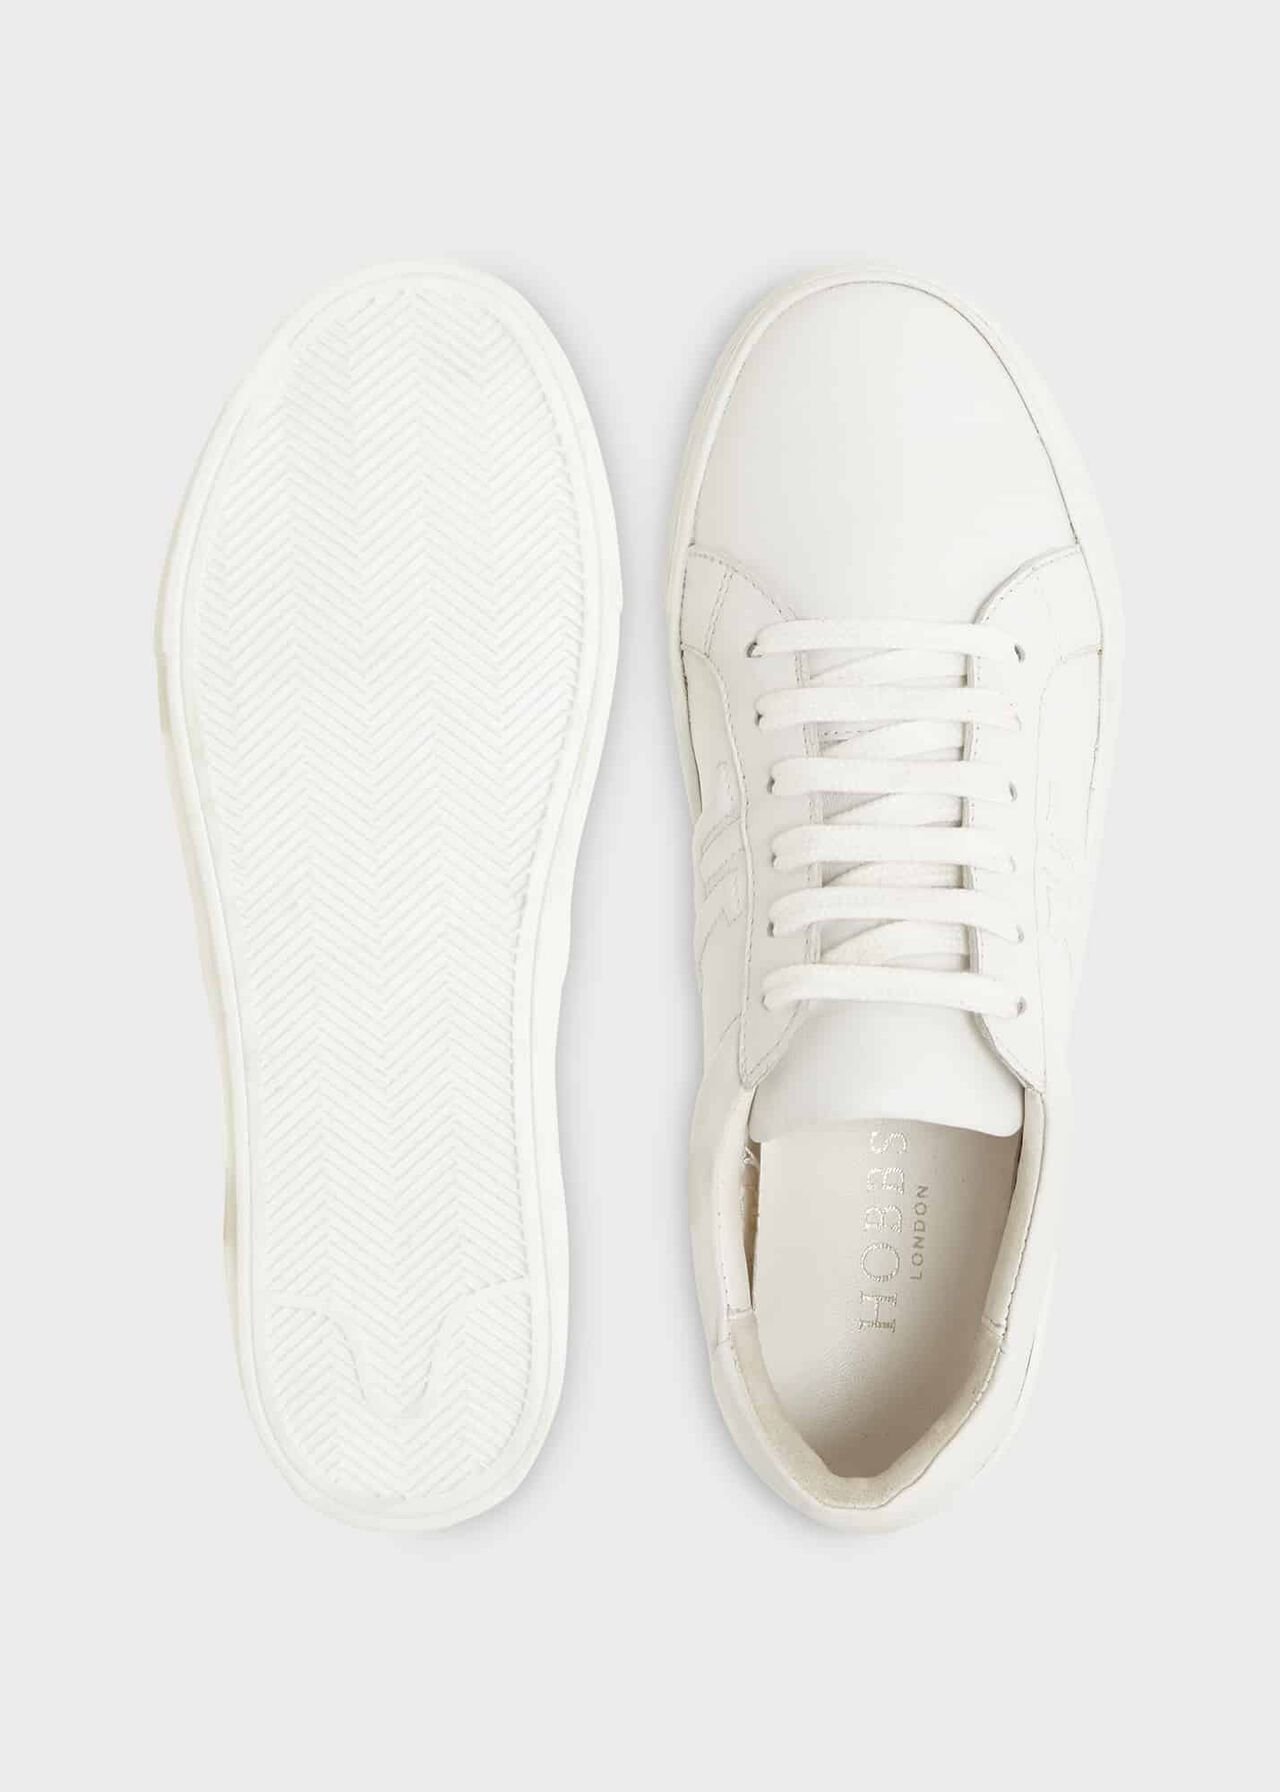 Simone Sneakers, White, hi-res